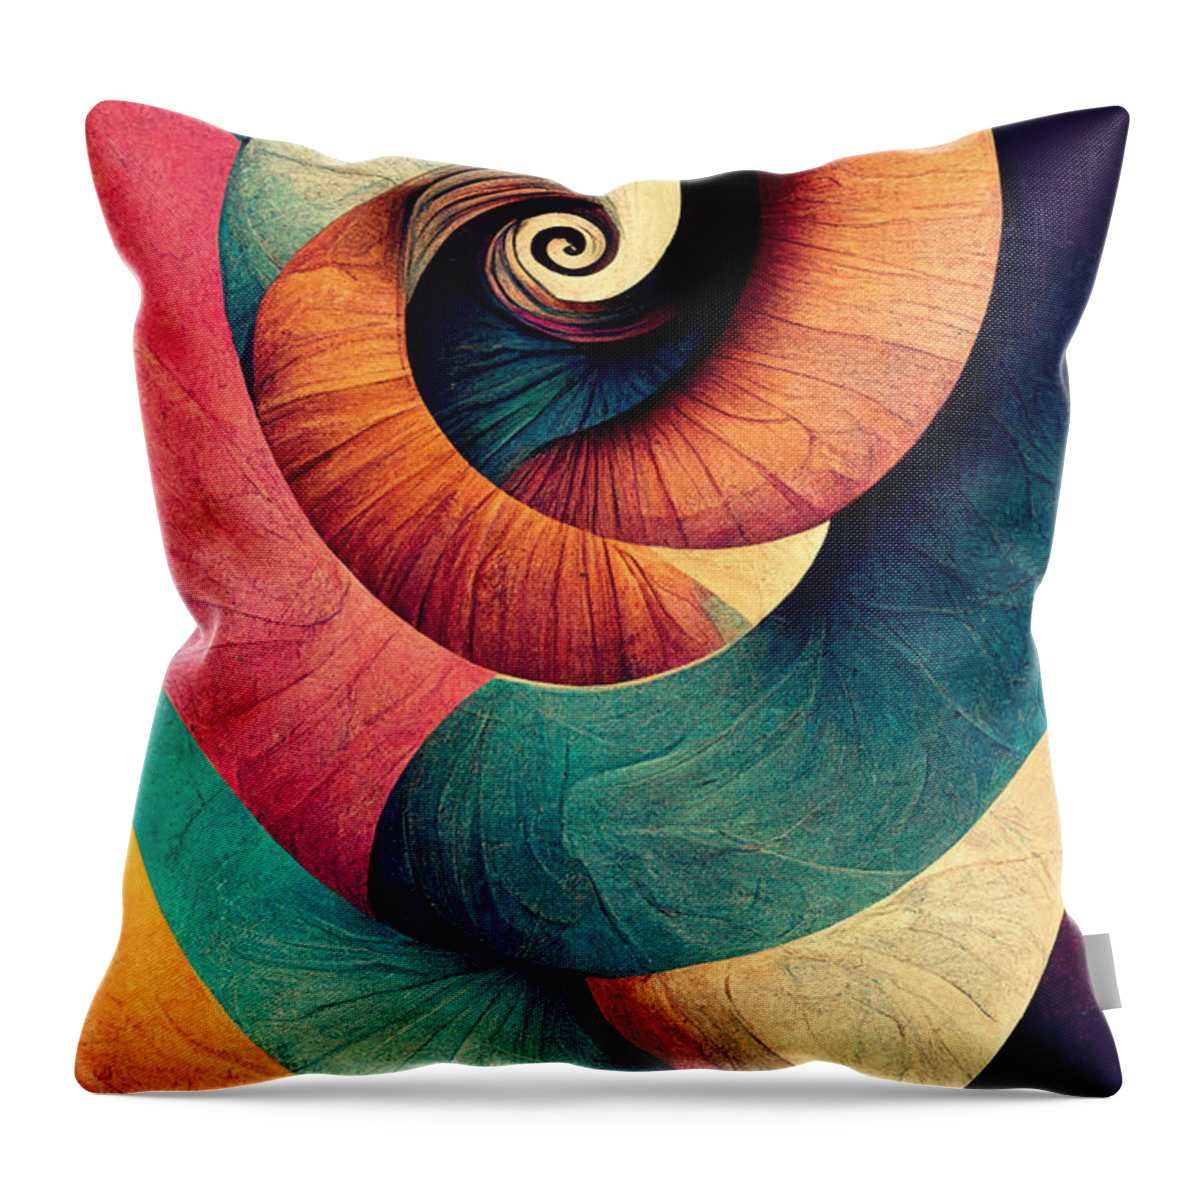 Spiral Throw Pillow featuring the digital art Color spirals by Sabantha